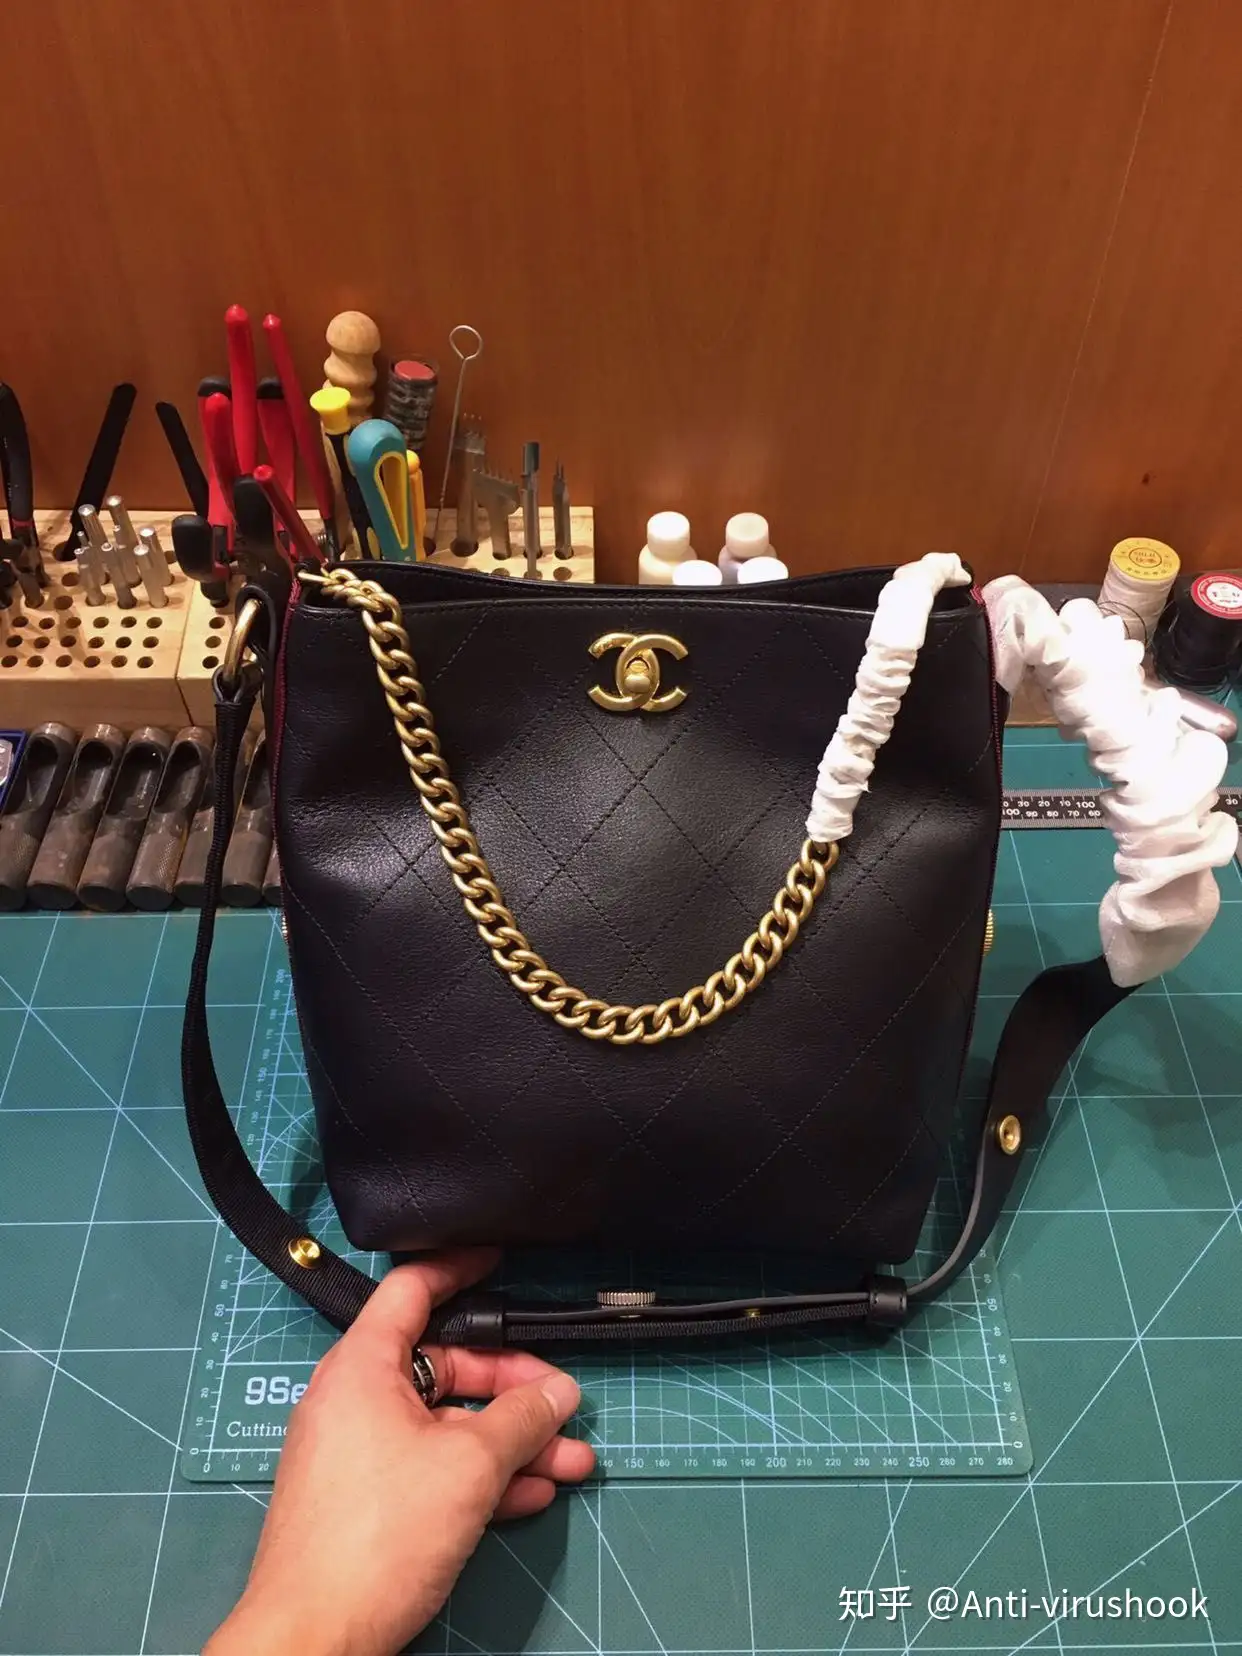 Chanel Button Up Hobo Bag A57573/A57576 Green 2018